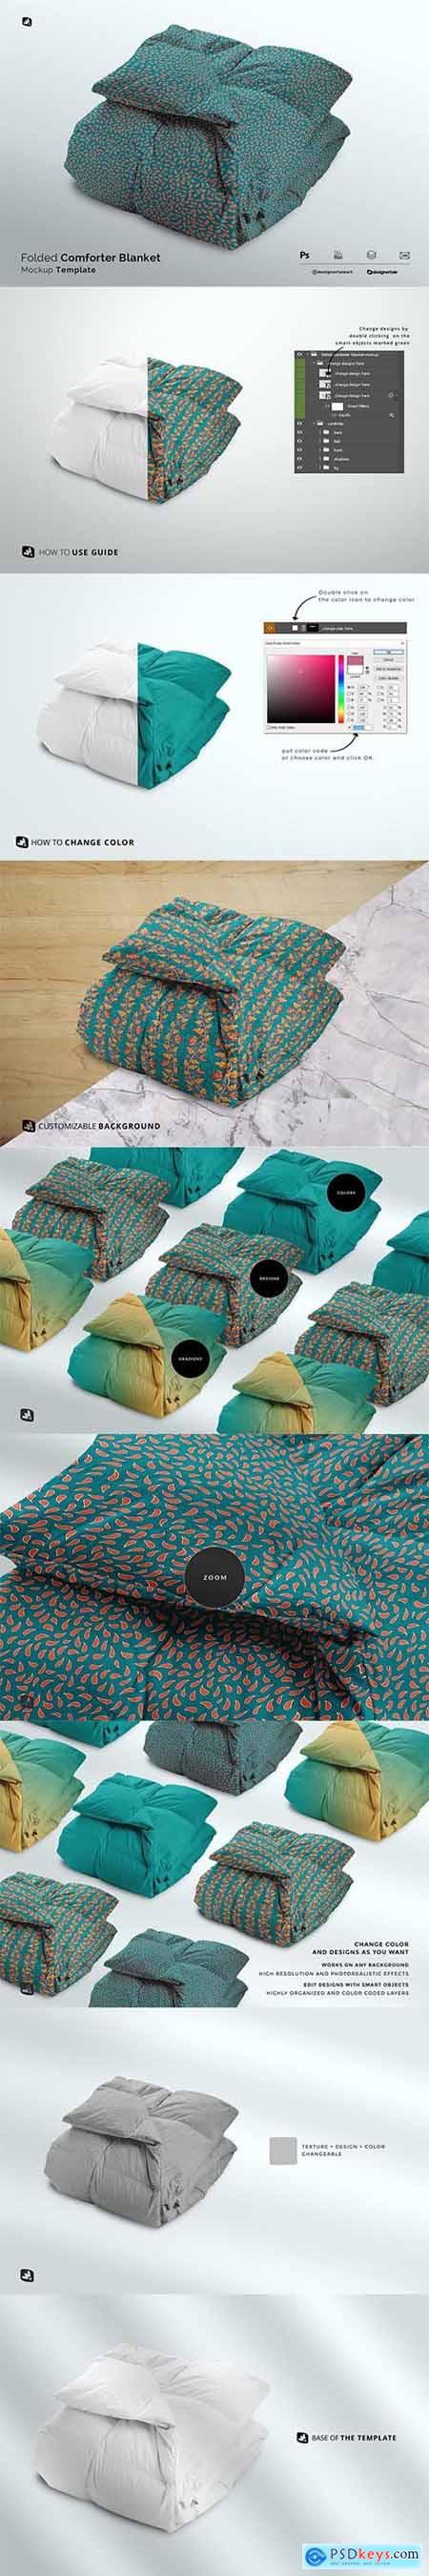 Folded Comforter Blanket Mockup 6331688